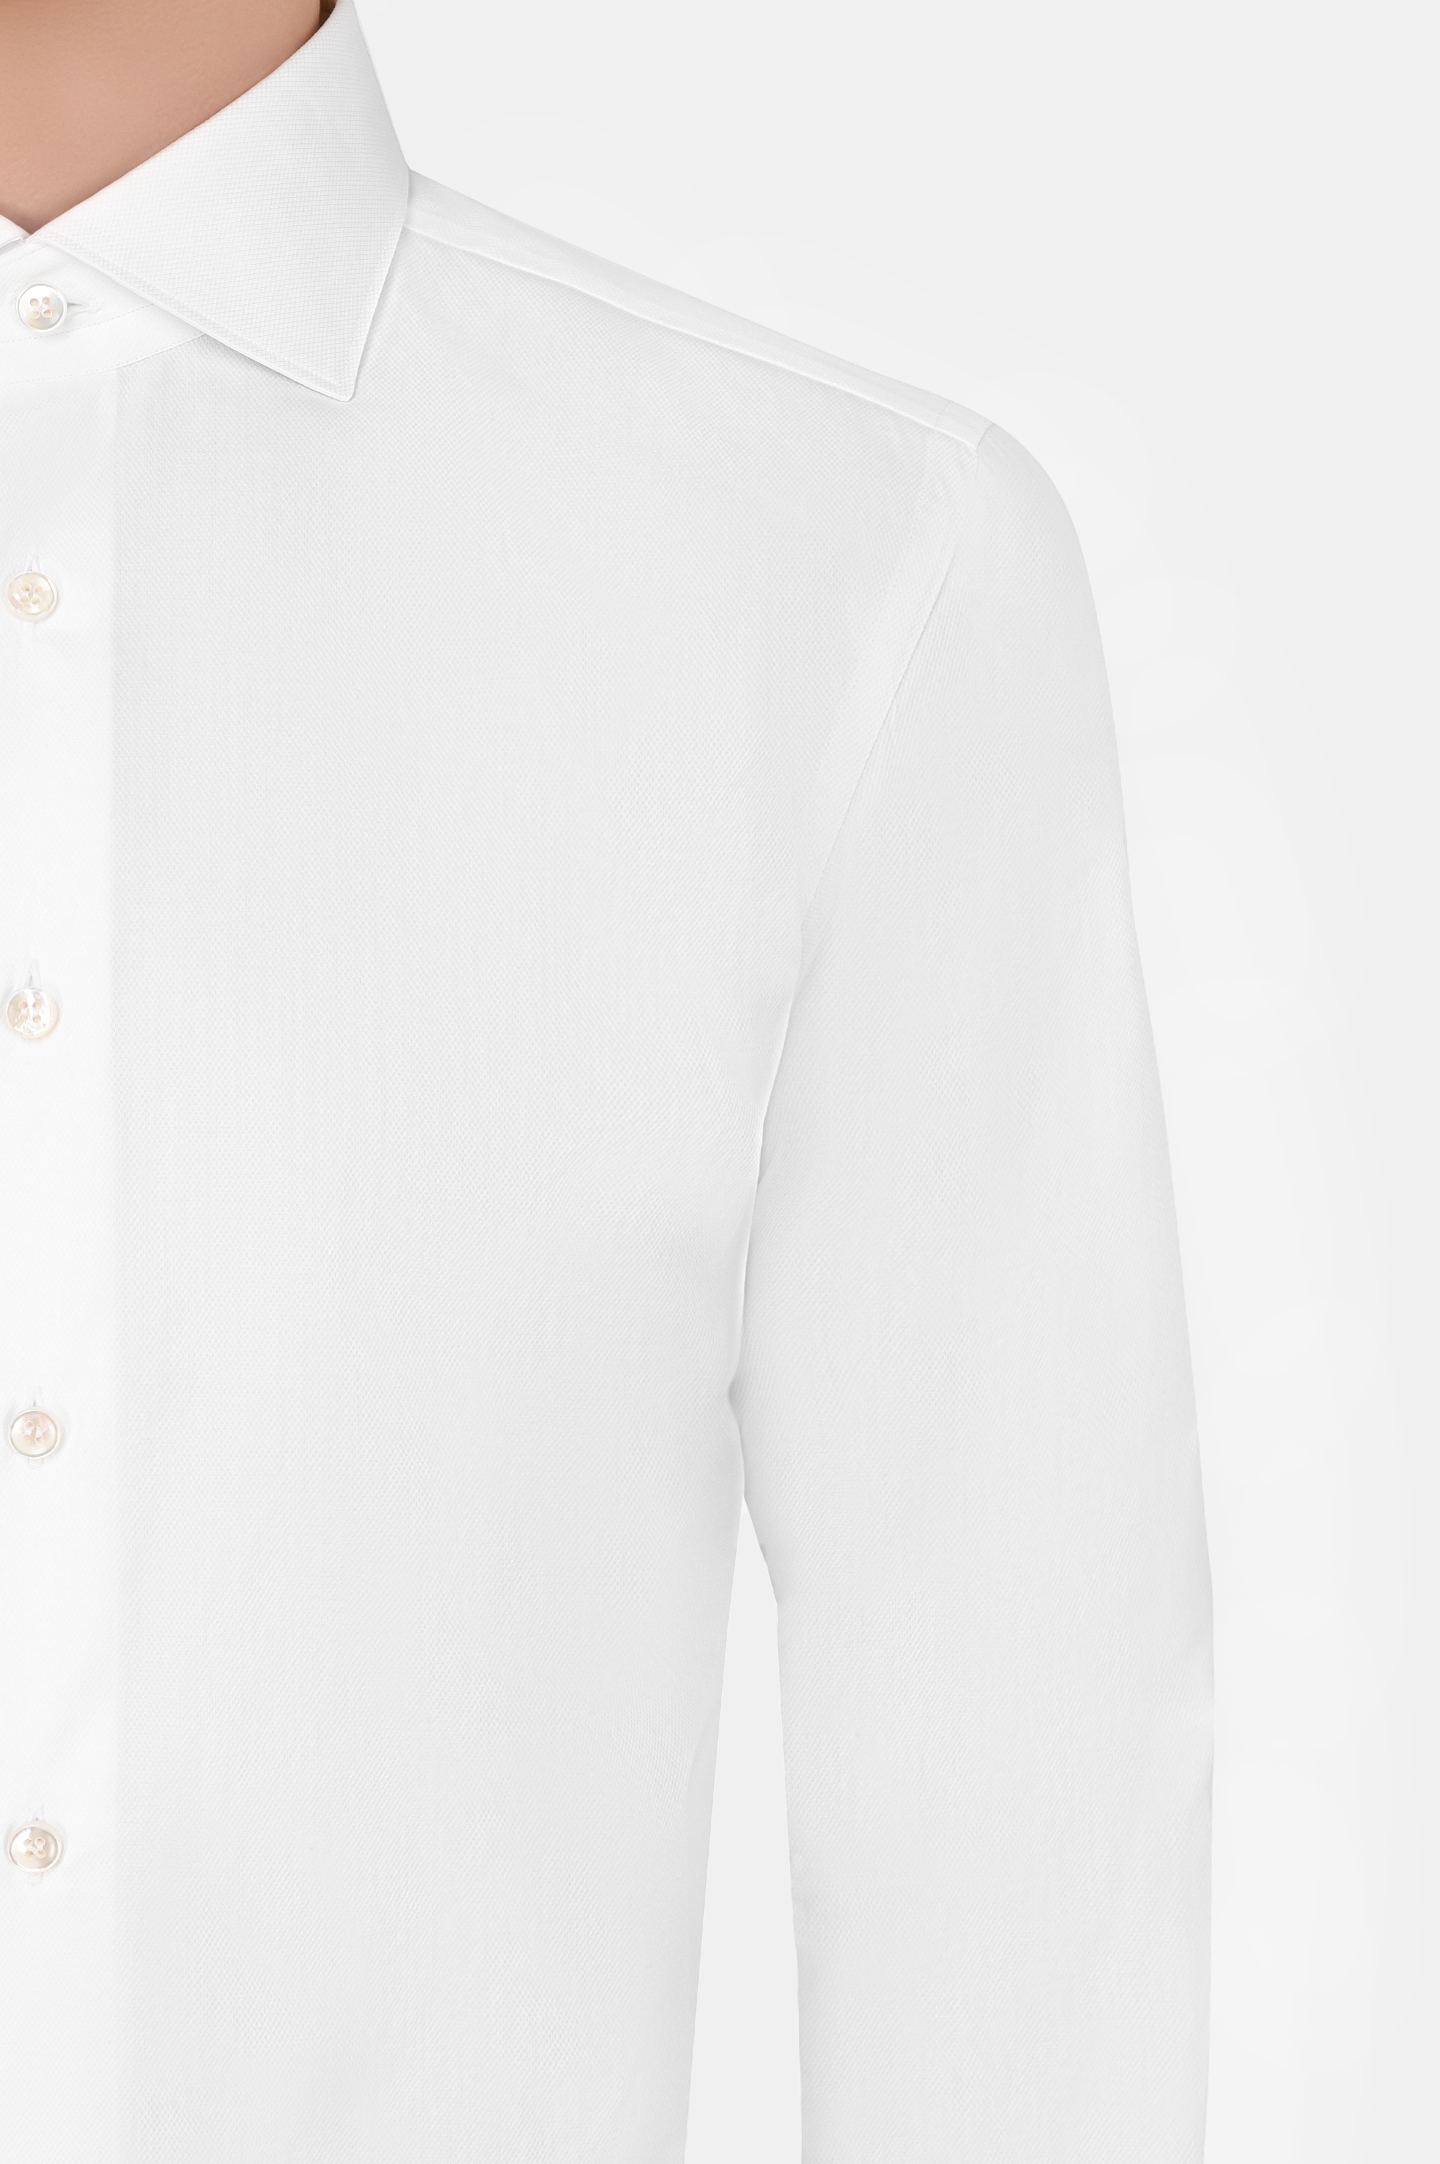 Рубашка BRIONI RCH10M O903V, цвет: Белый, Мужской